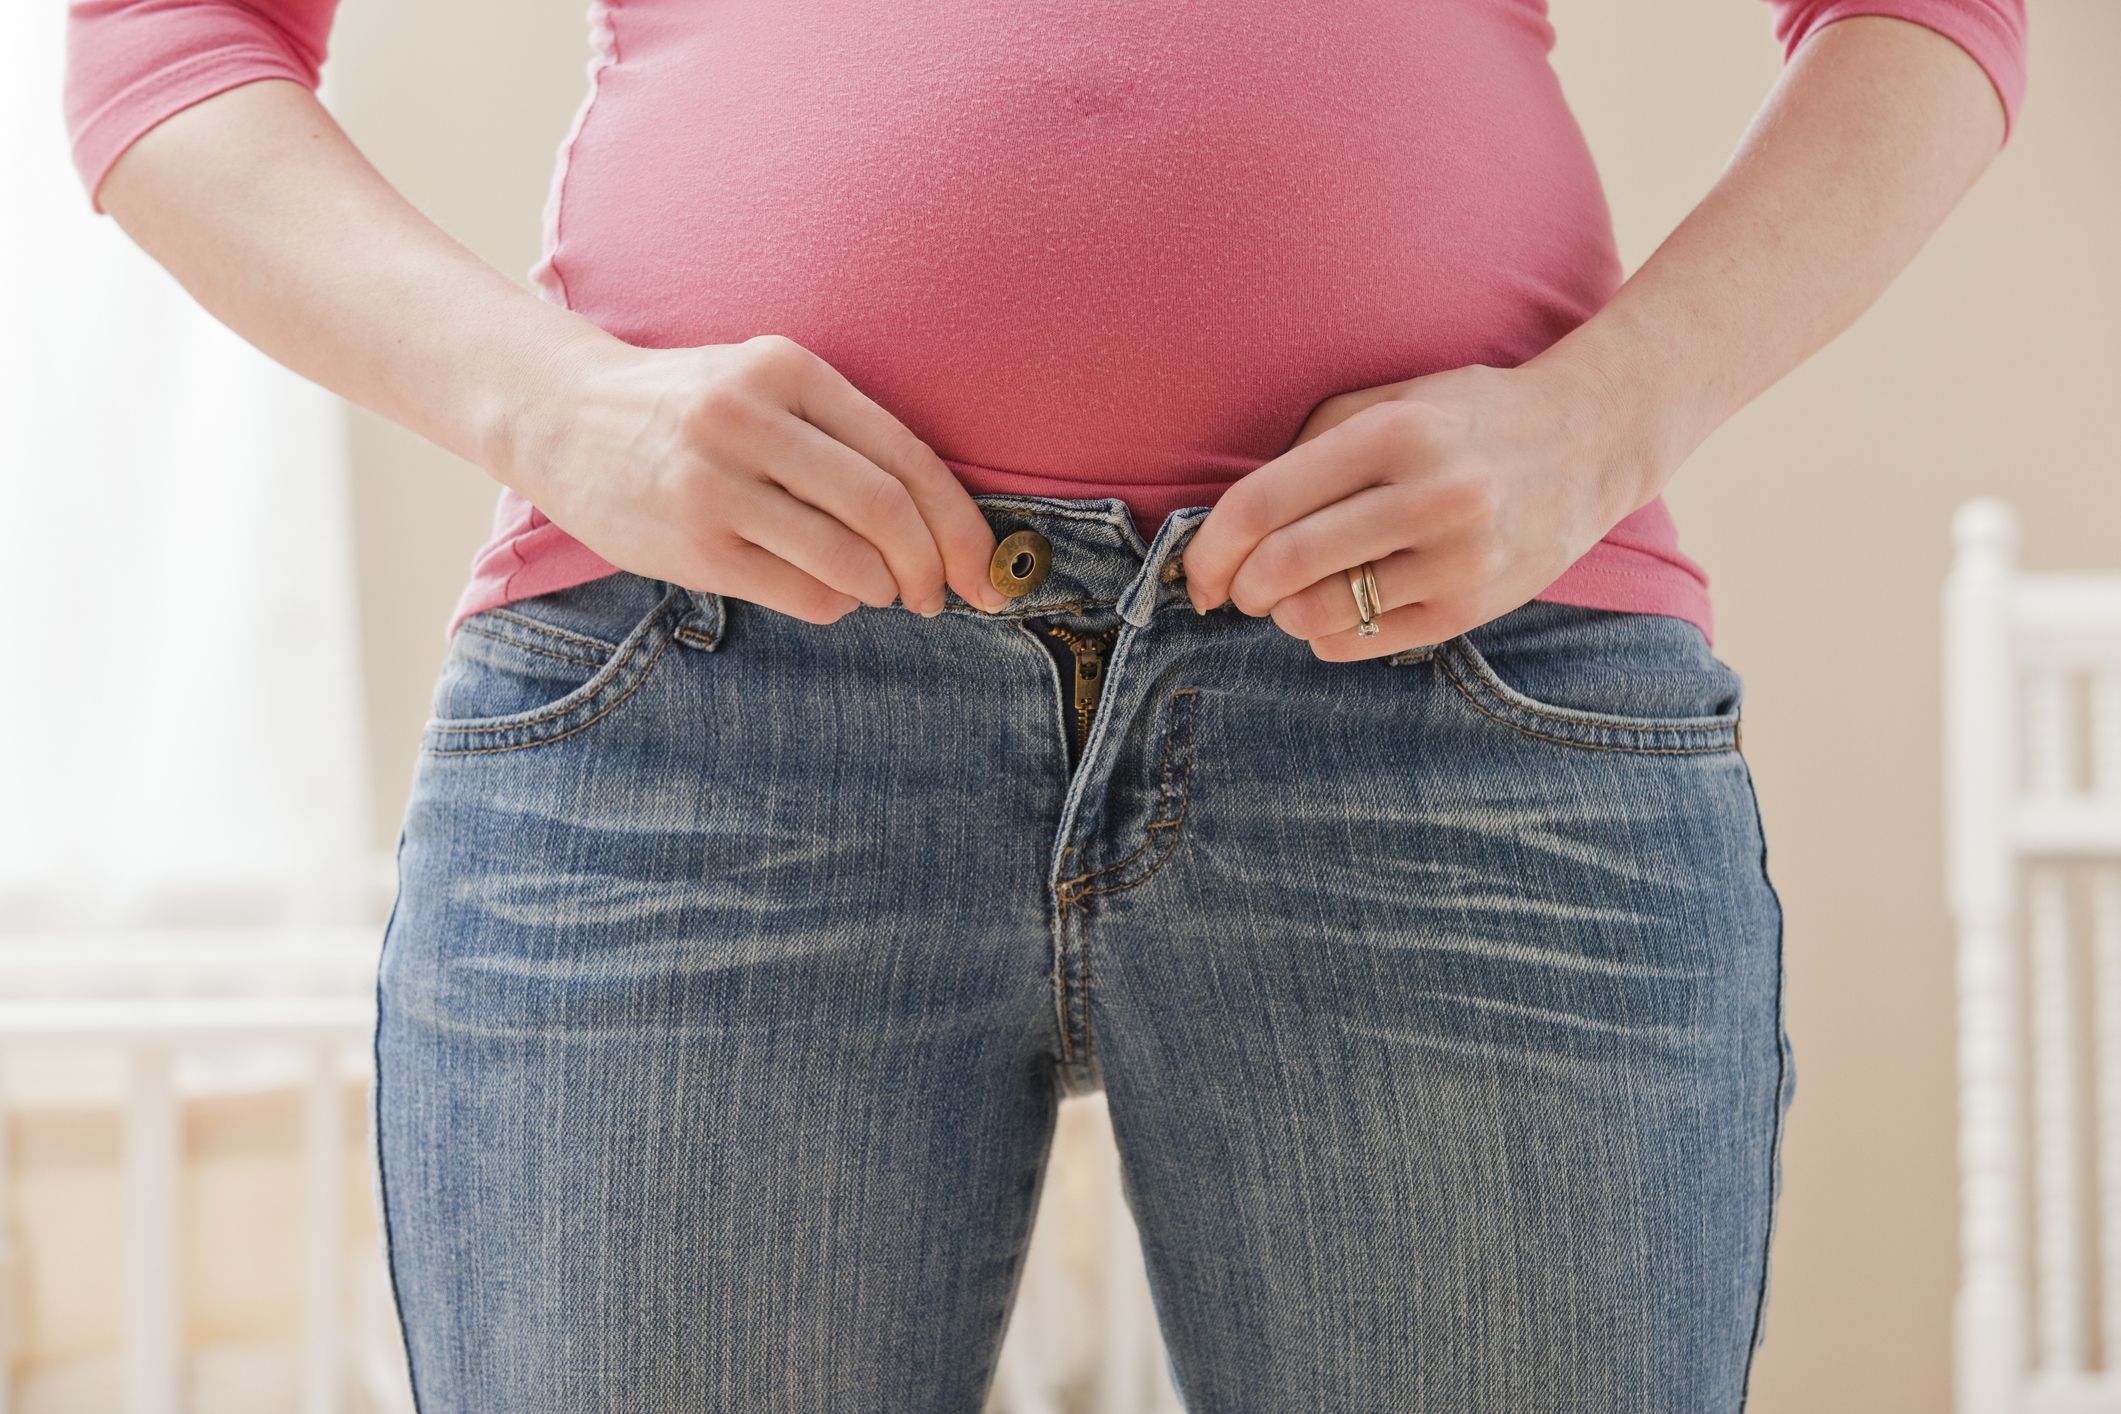 Got belly bloat? 10 bad habits to break now